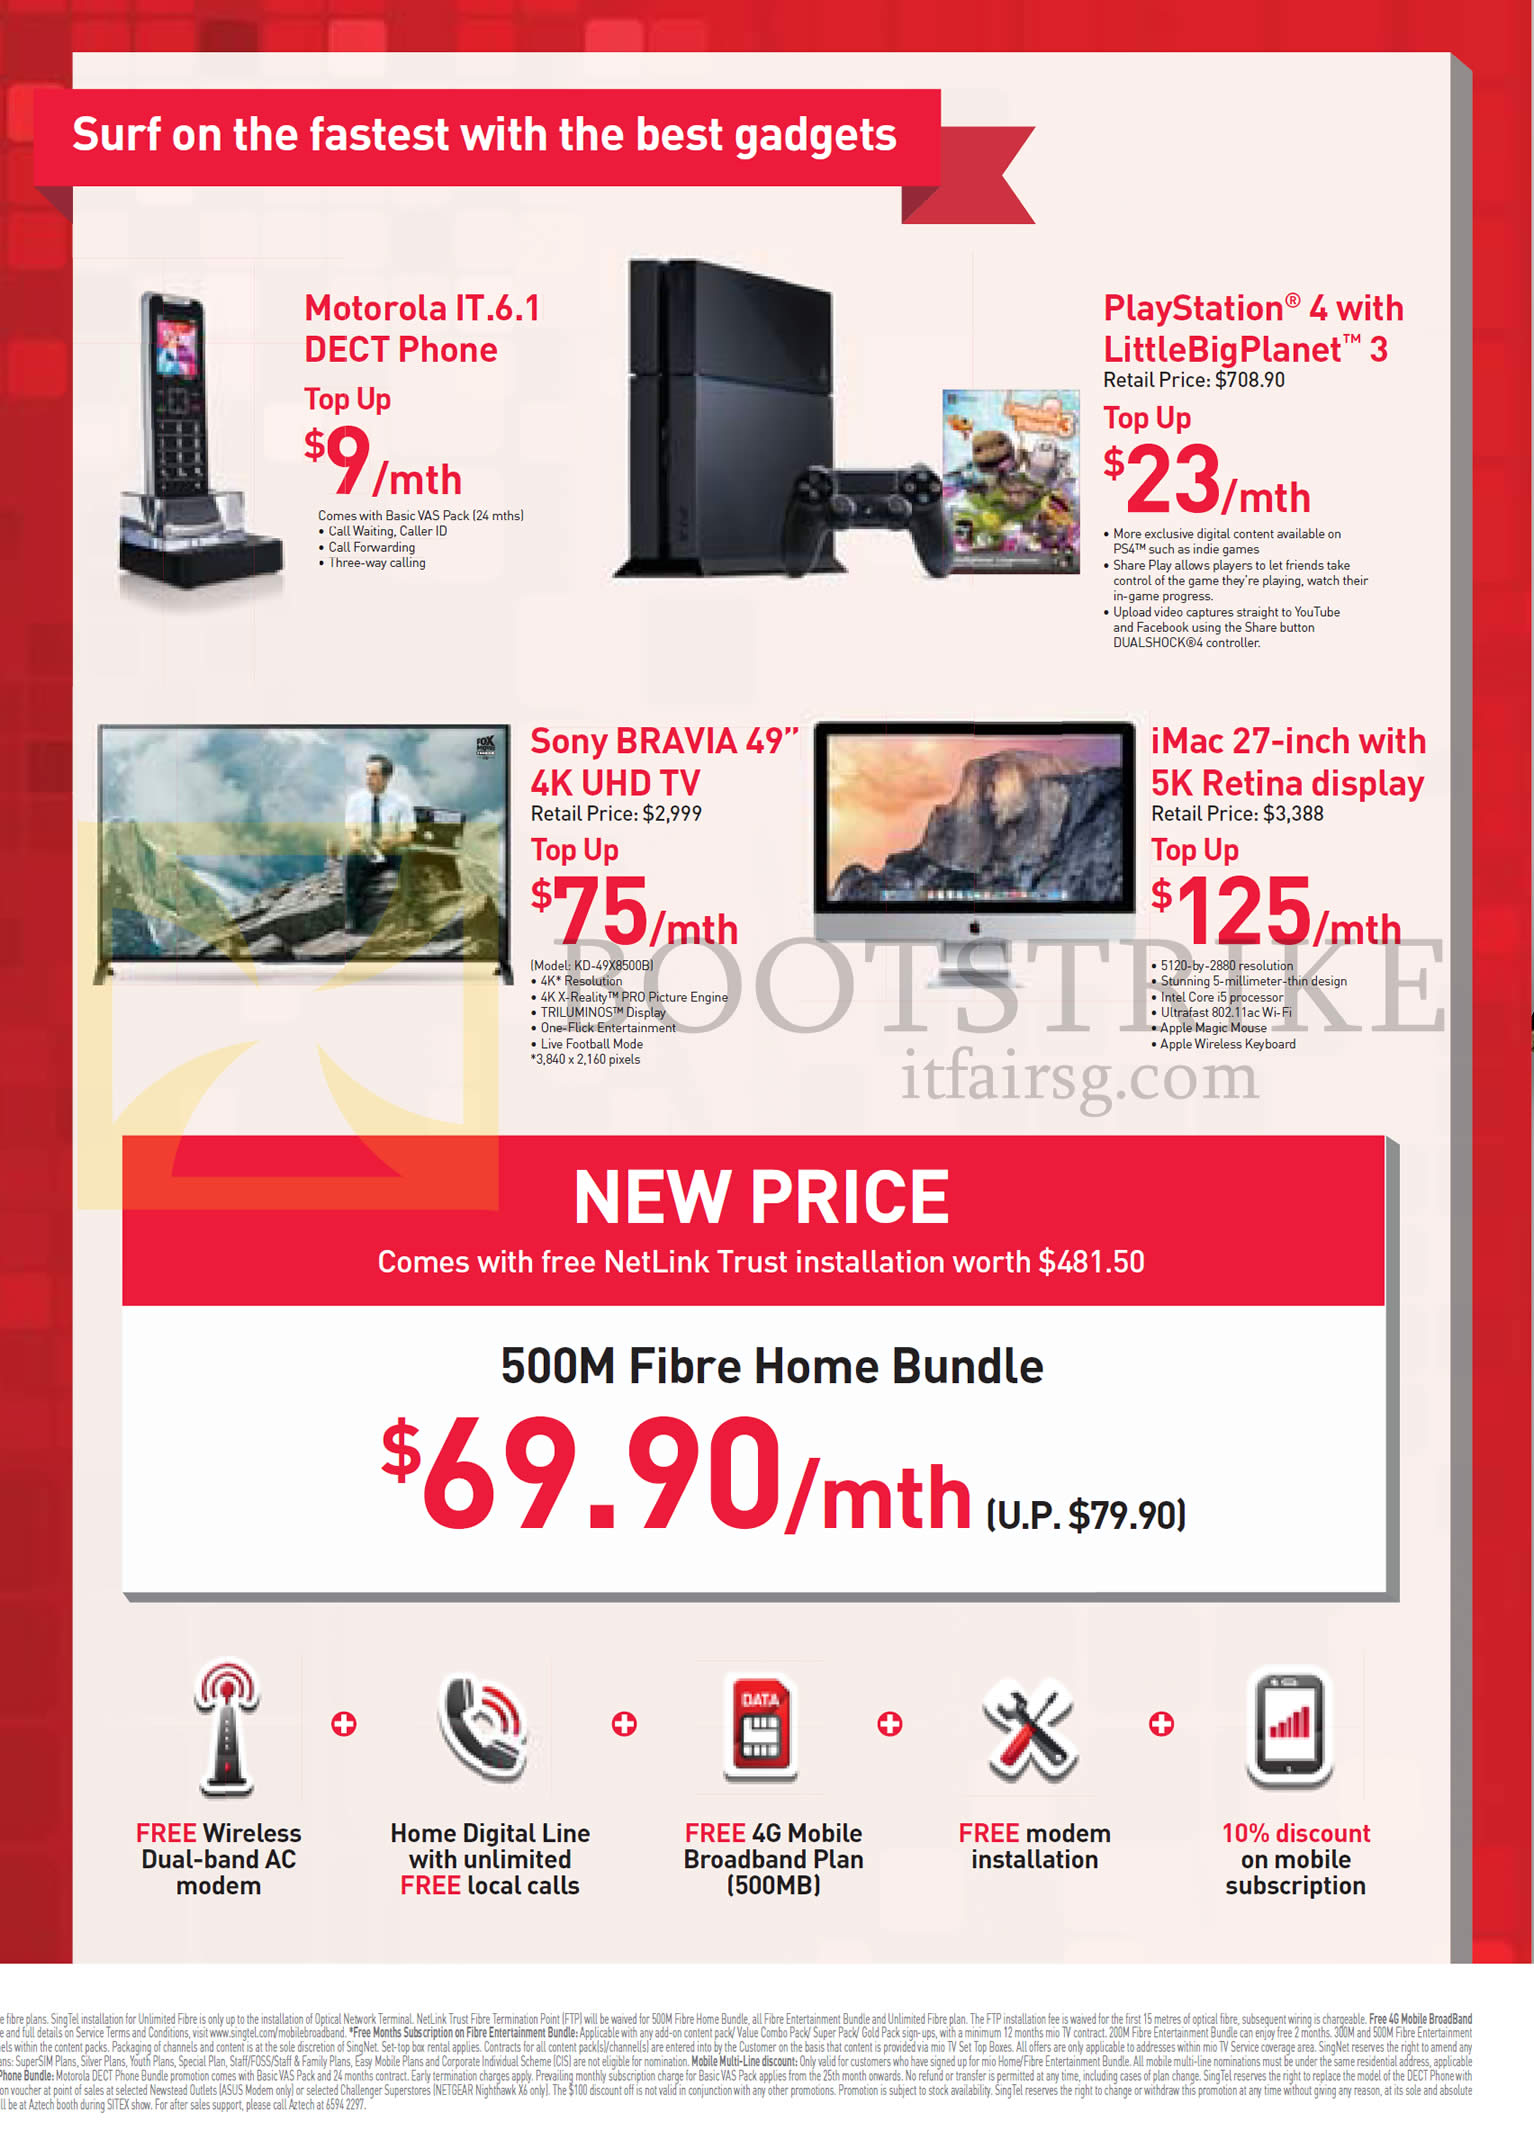 SITEX 2014 price list image brochure of Singtel Fibre Home Bundle 500M 69.90, Motorola IT.6.1, Sony PlayStation 4, Sony Bravia 4K TV, IMac